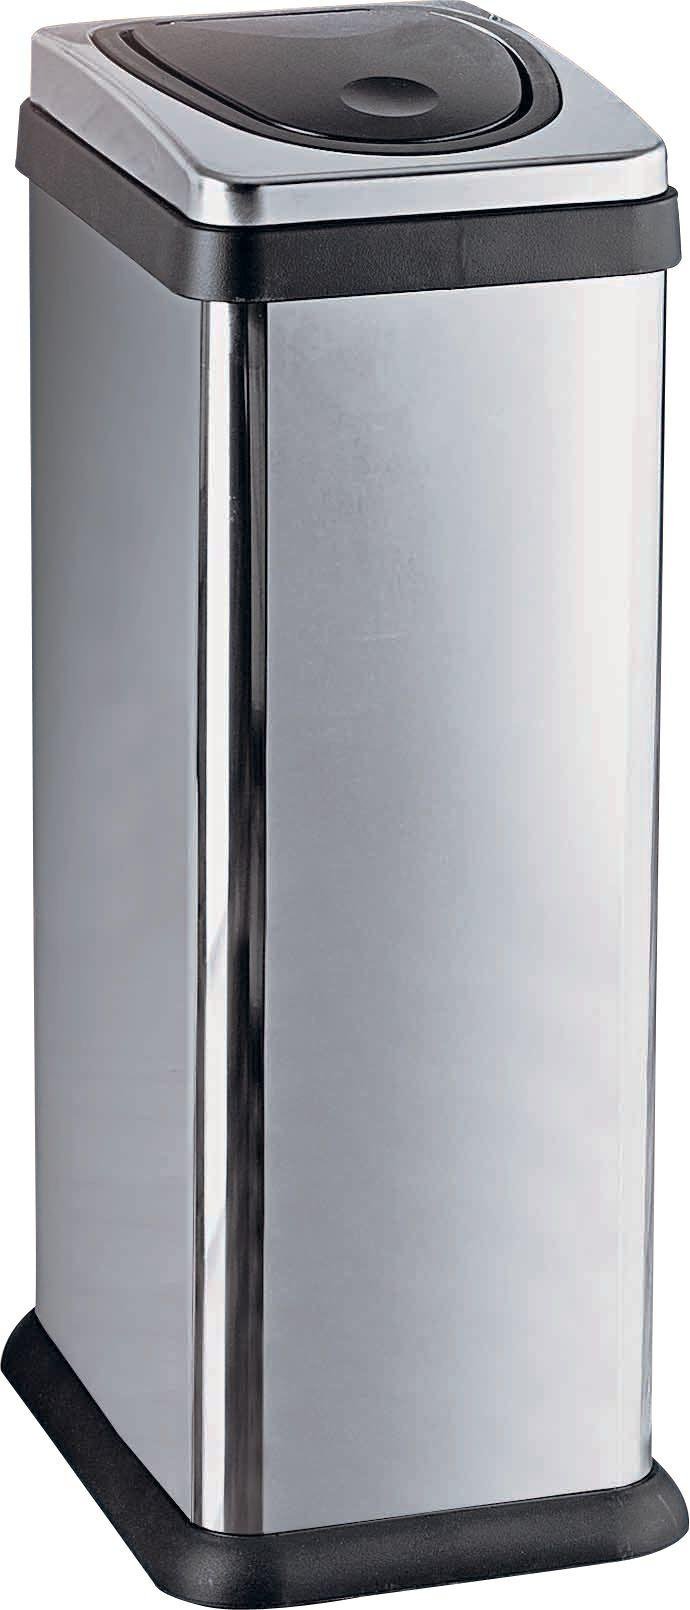 Argos Home 30Litre Rectangular Touch Top Kitchen Bin -Silver Review